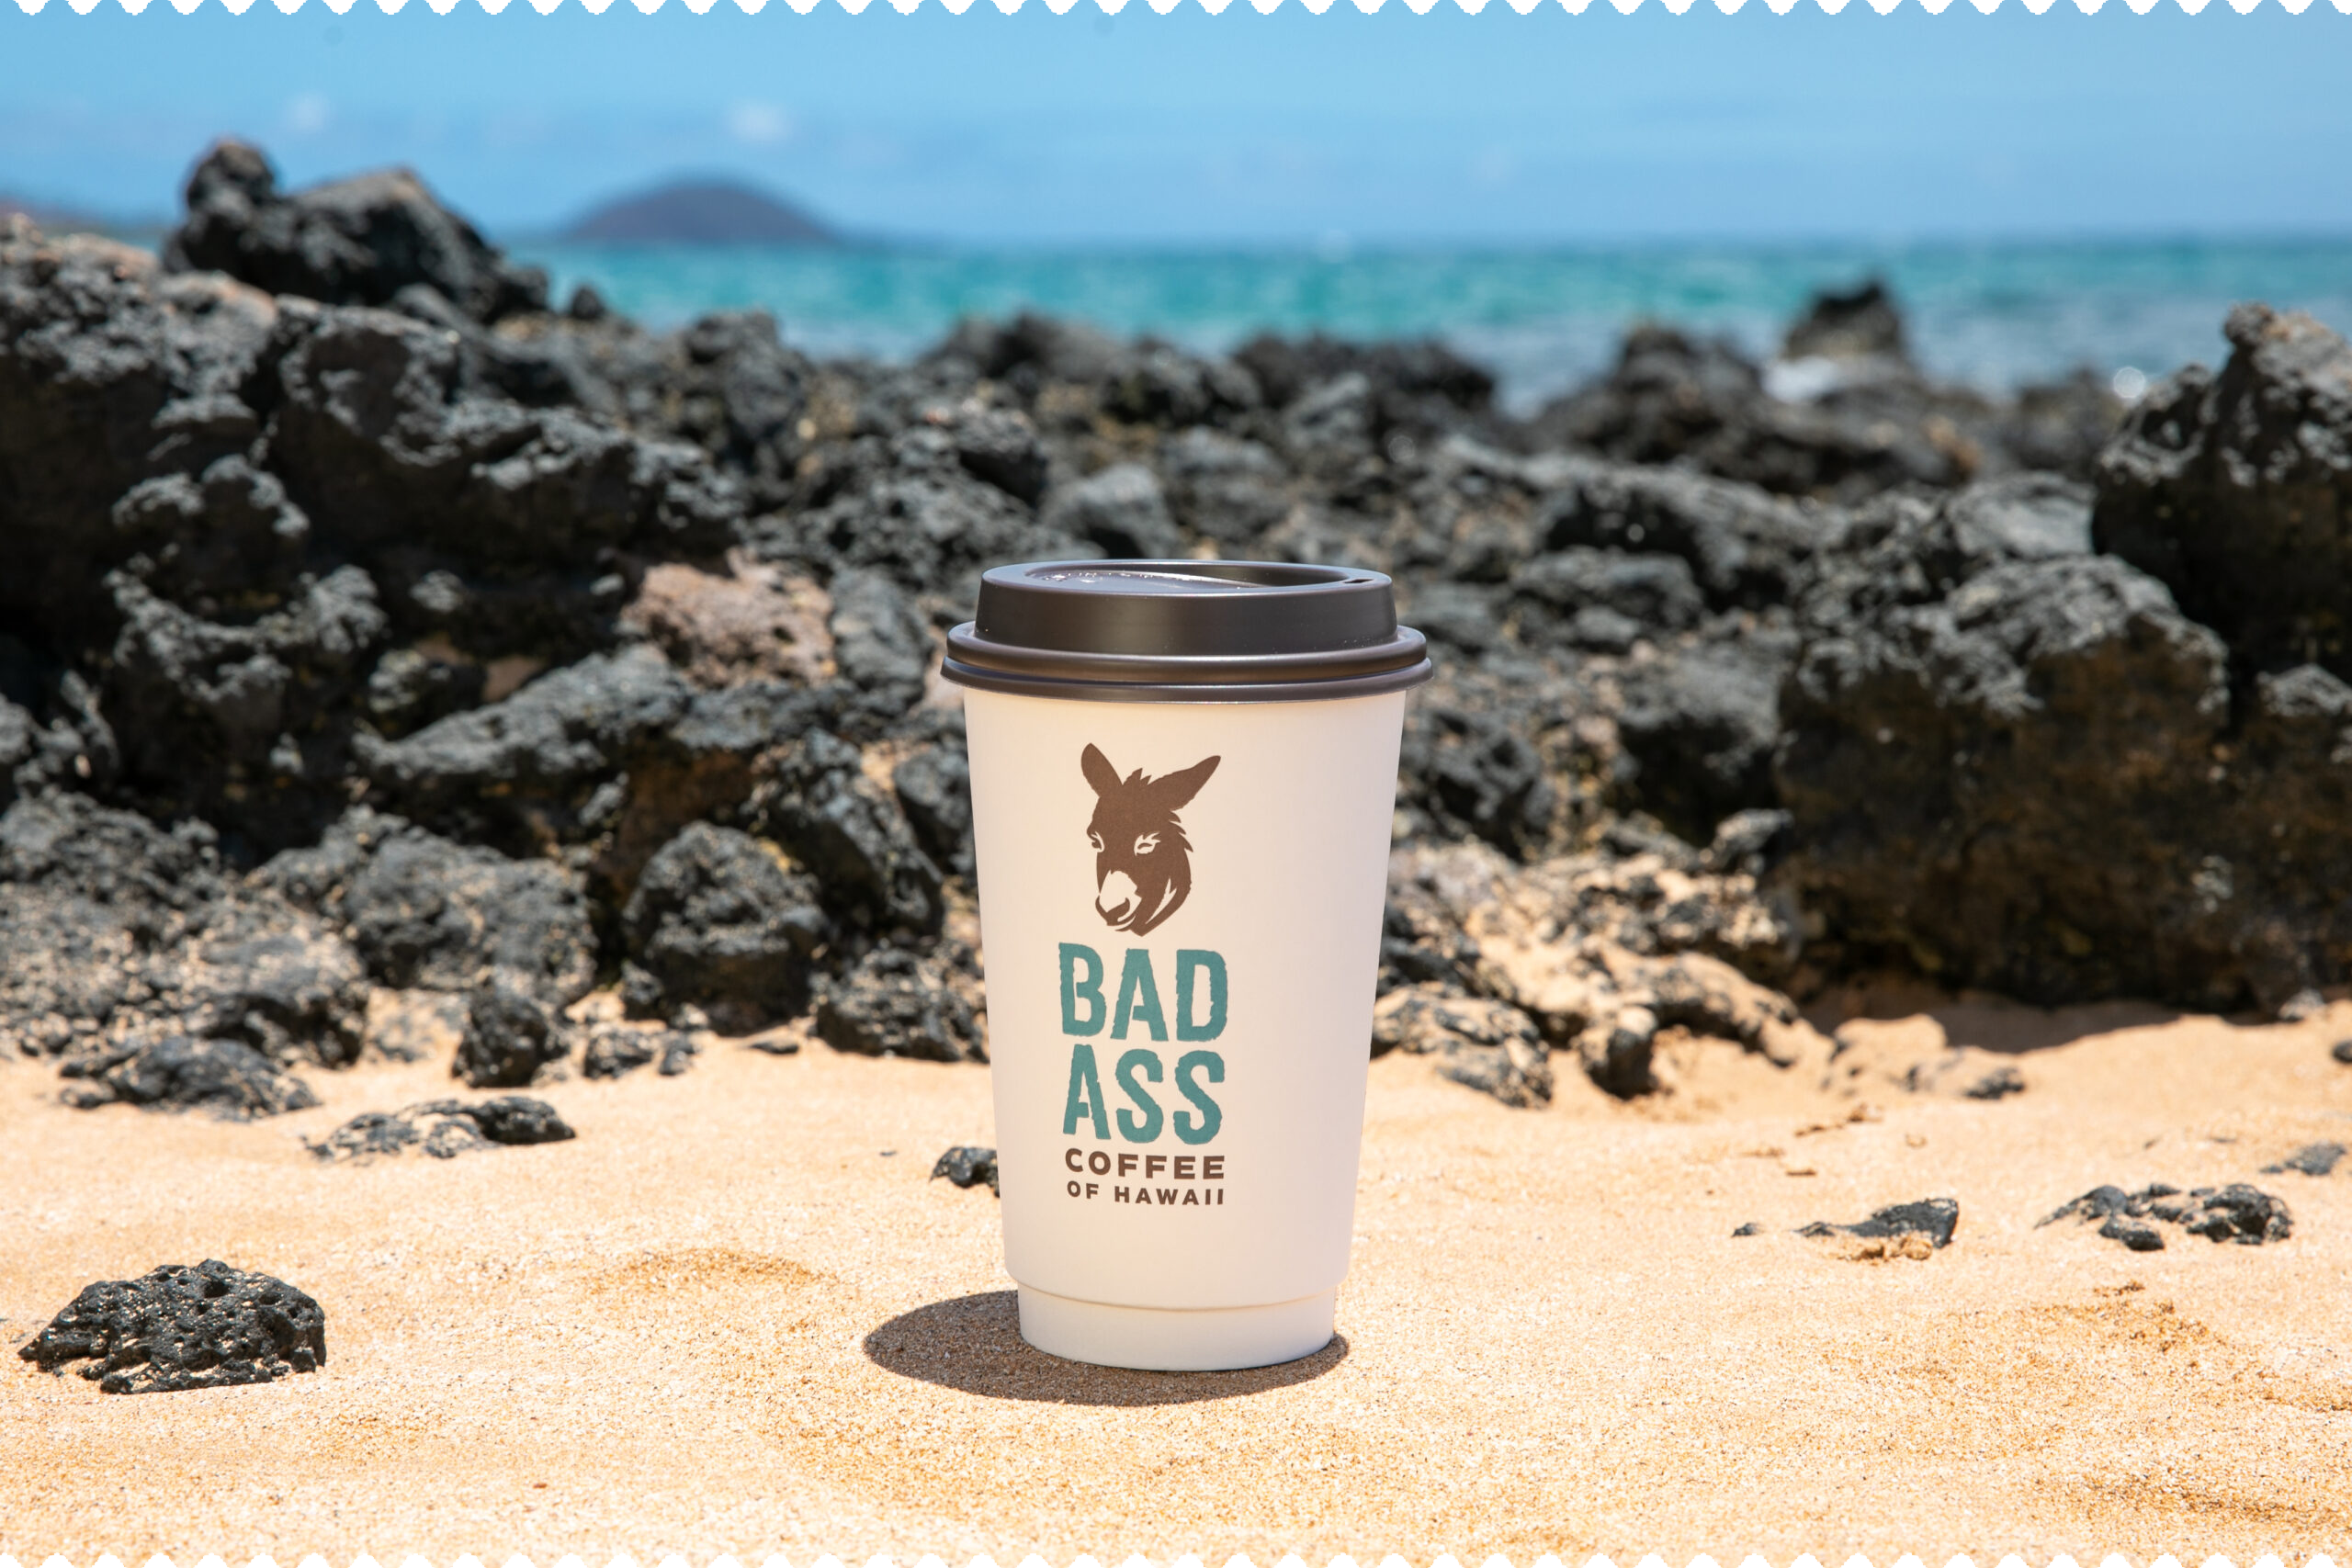 Coffee cup on a volcanic beach